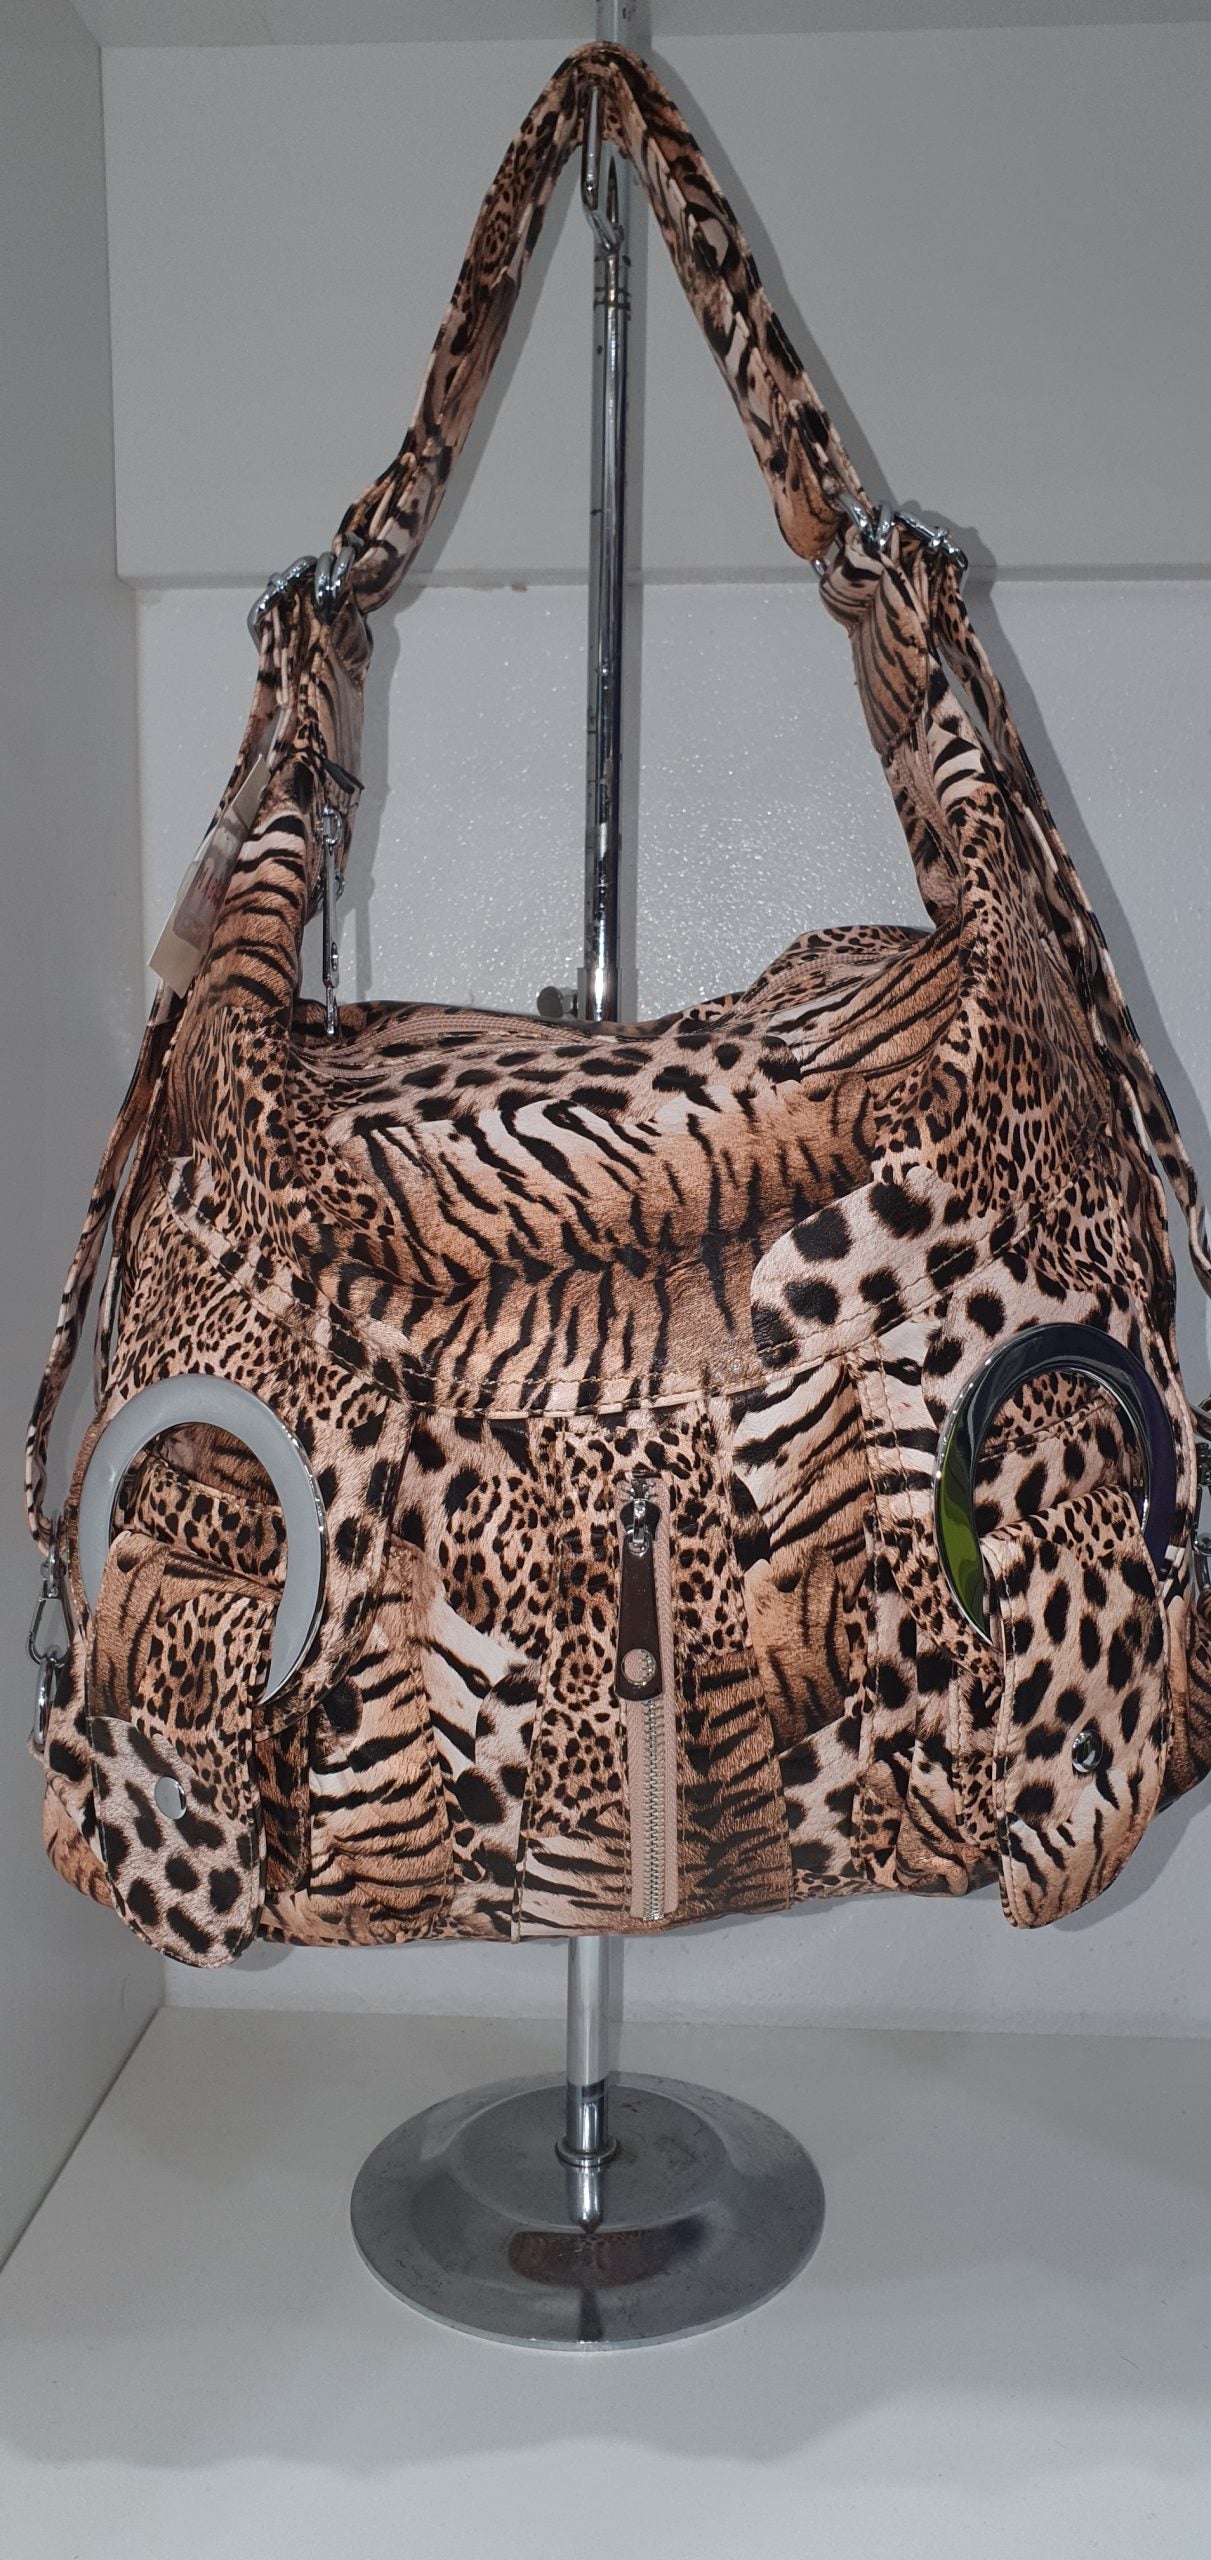 Chain Fashion - handbag with backpack